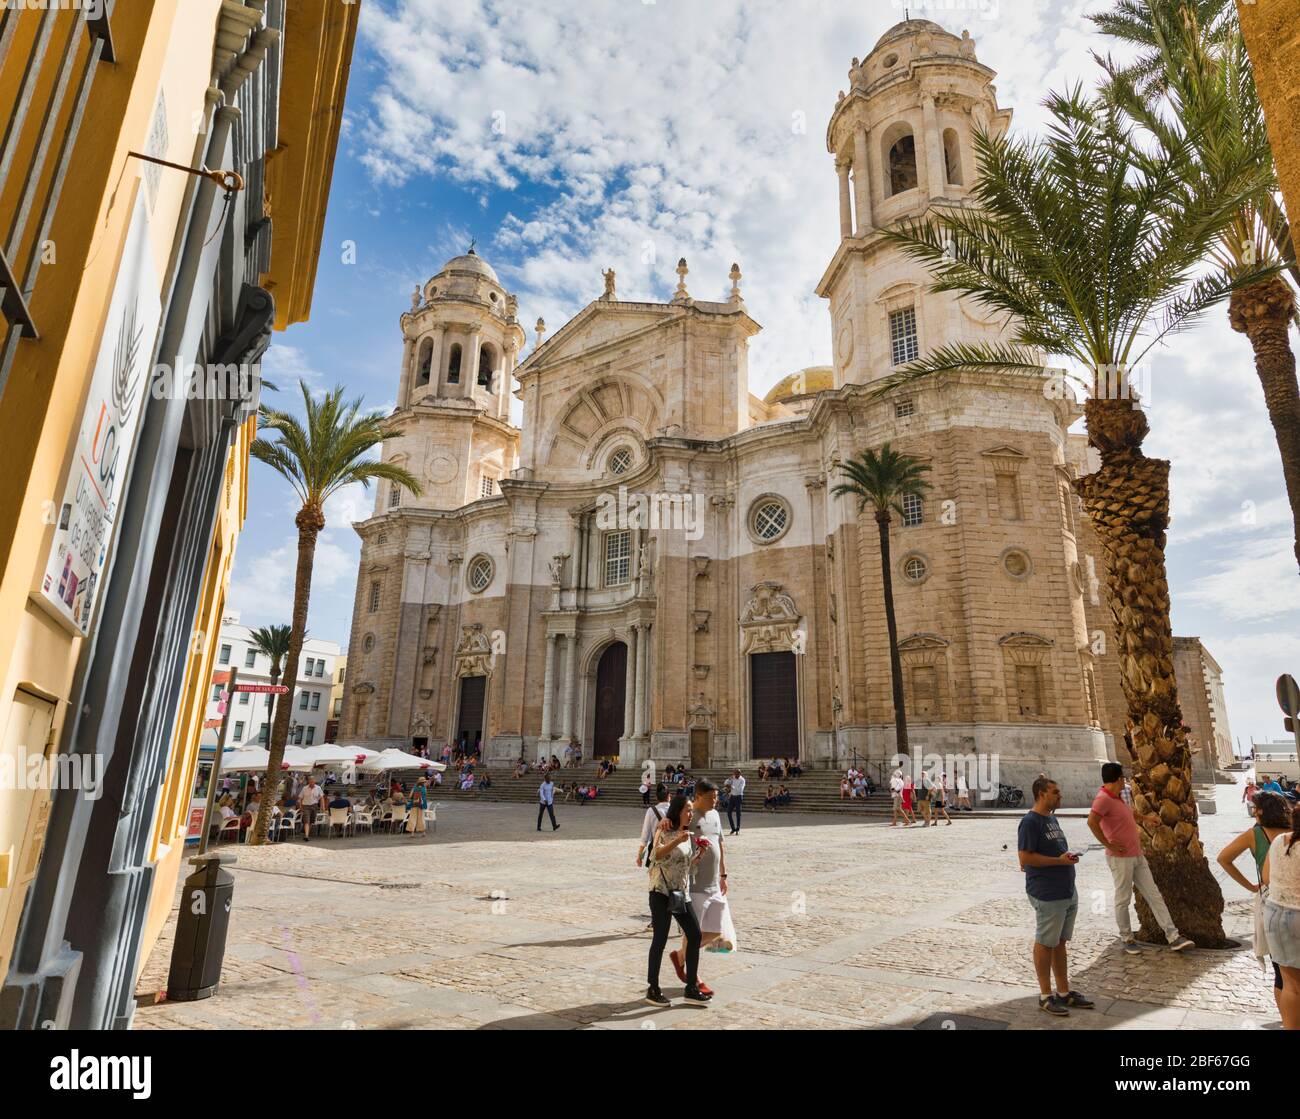 La catedral en la Plaza de la Catedral, o Plaza de la Catedral, Cádiz, Provincia de Cádiz, Costa de la Luz, Andalucía, España. El nombre oficial del cathed Foto de stock